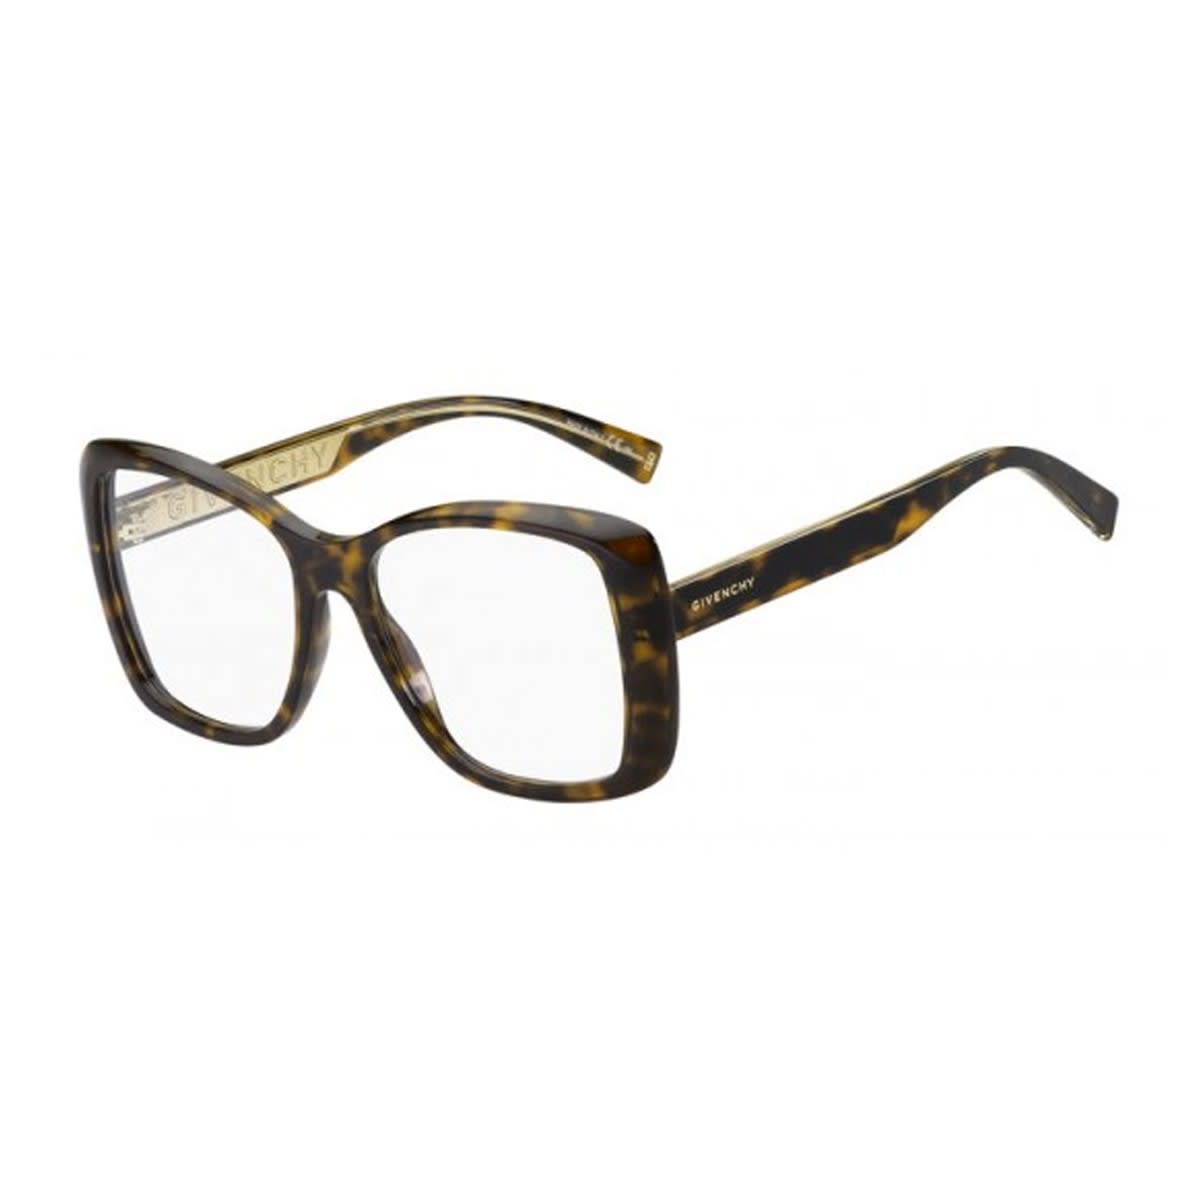 Givenchy Gv 0135 Glasses In Marrone